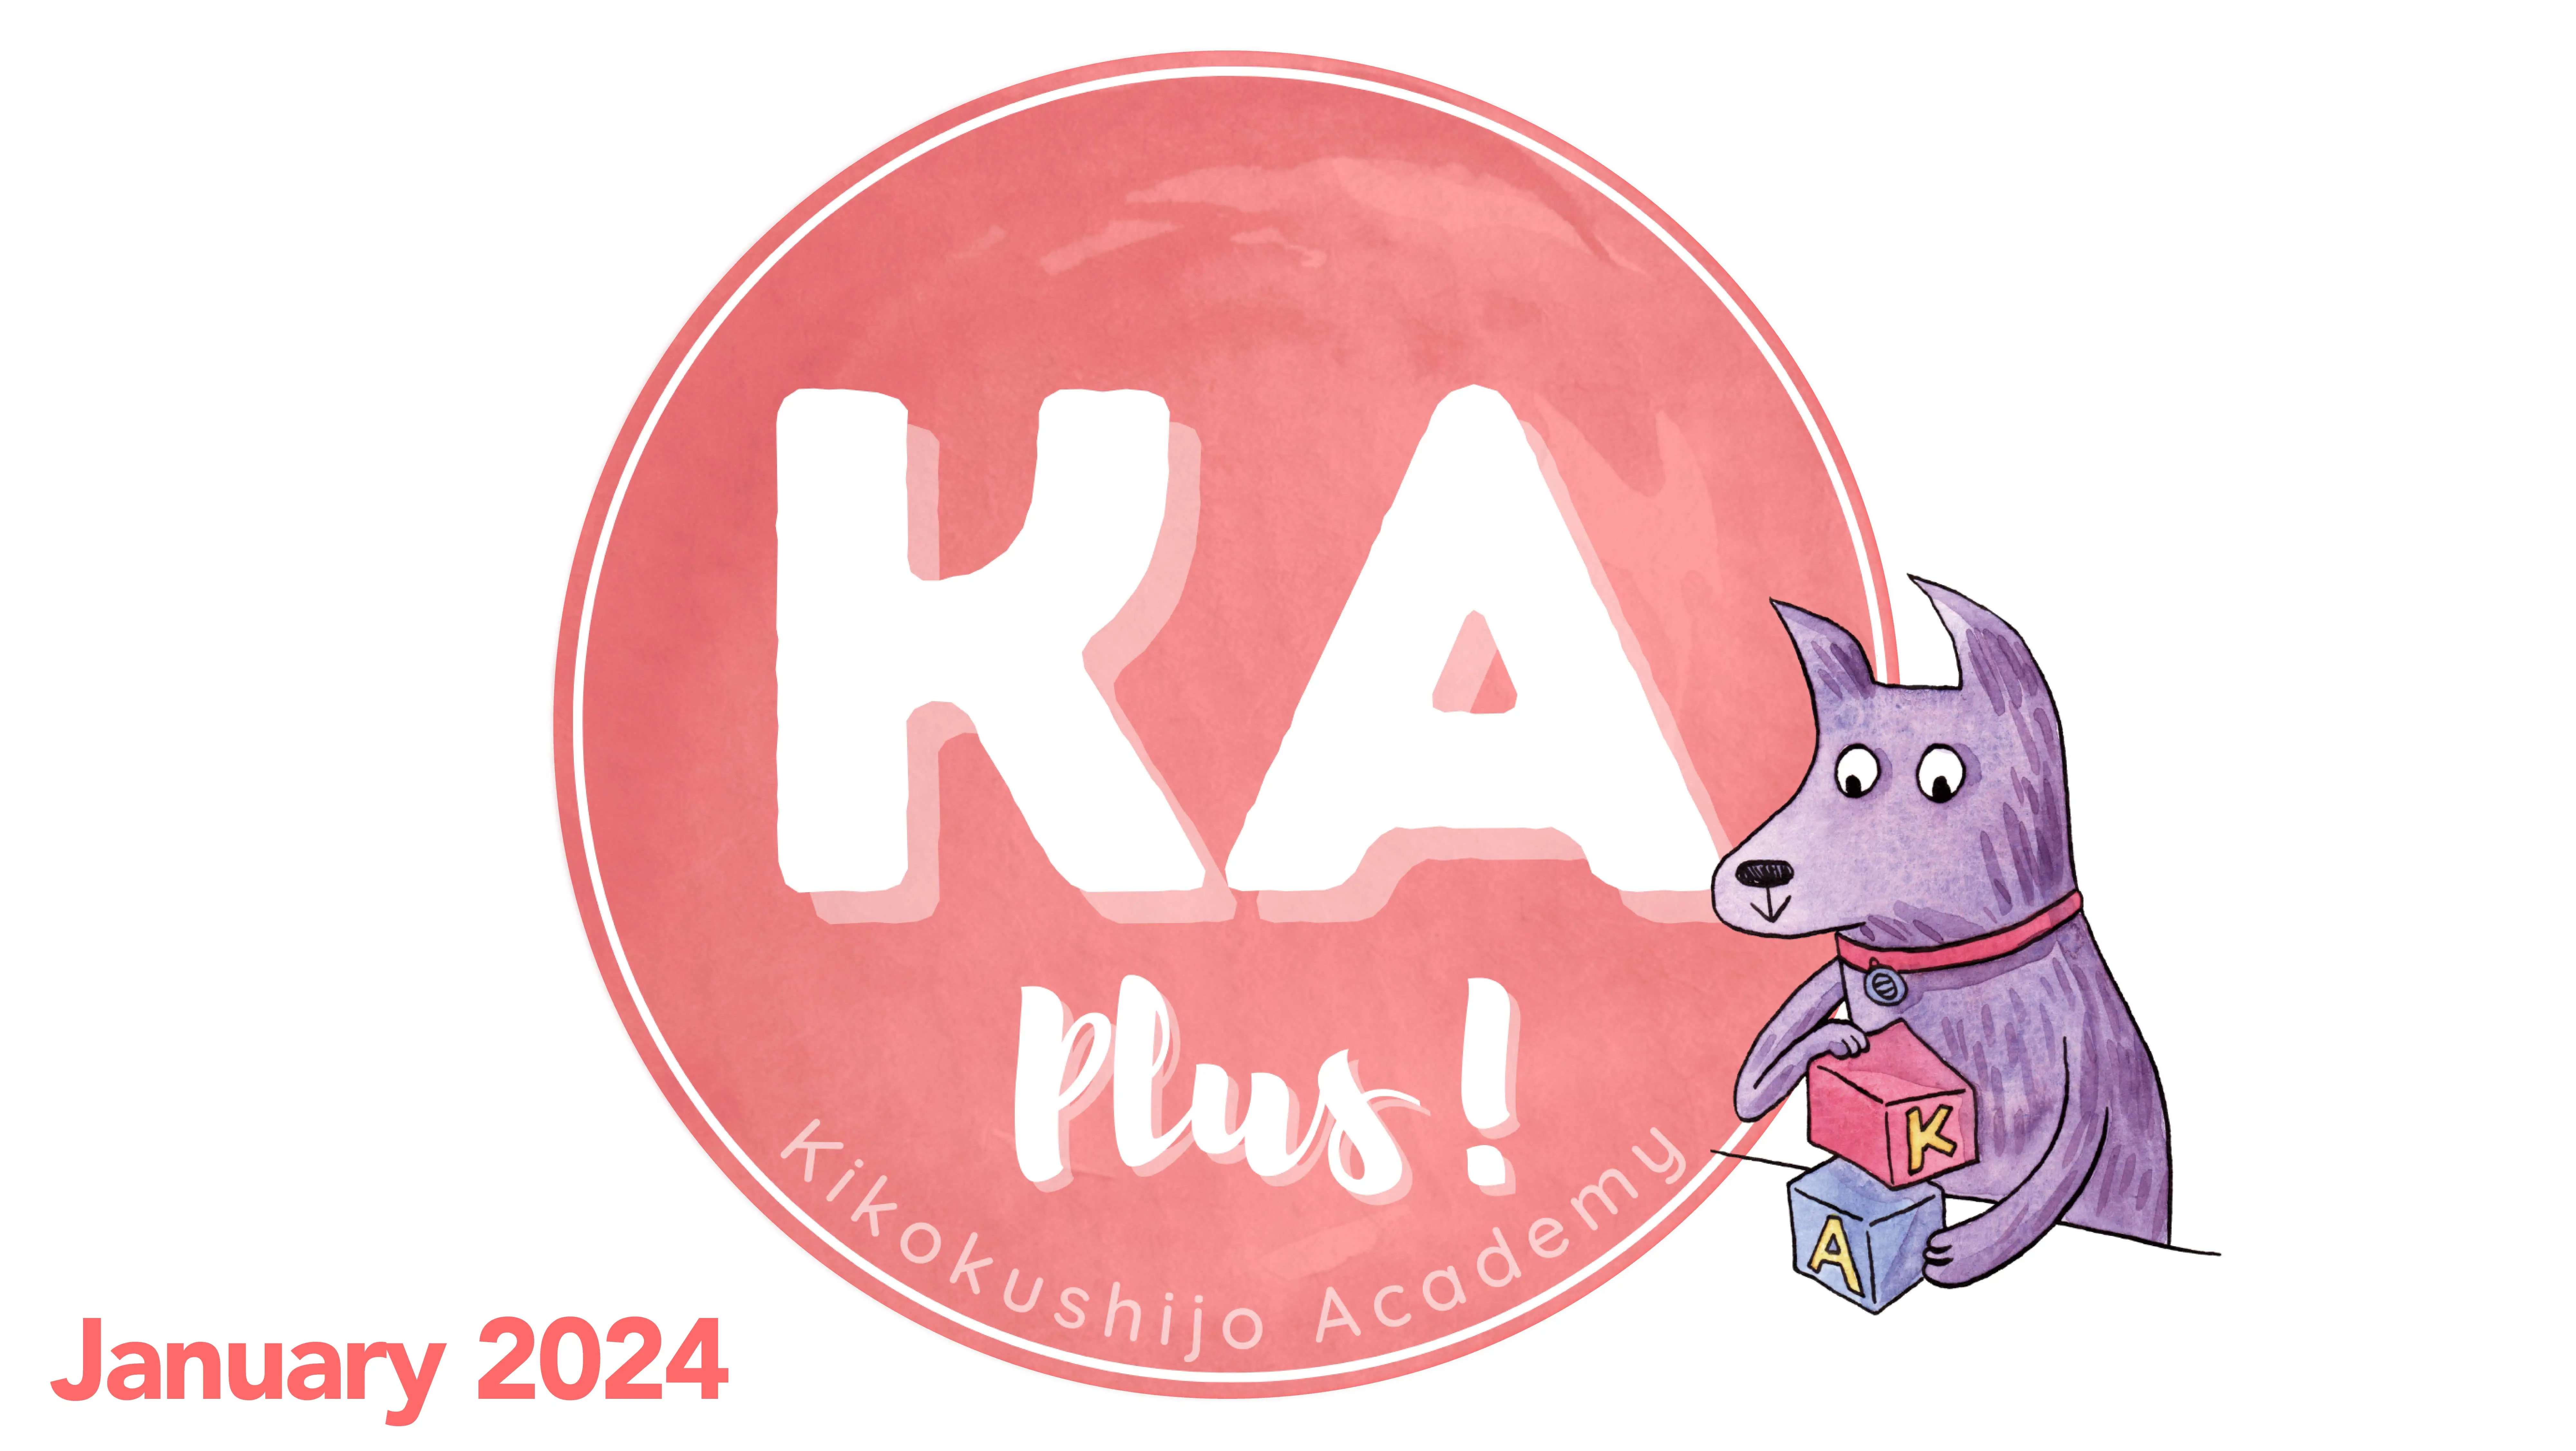 What's new on KA Plus! - January 2024